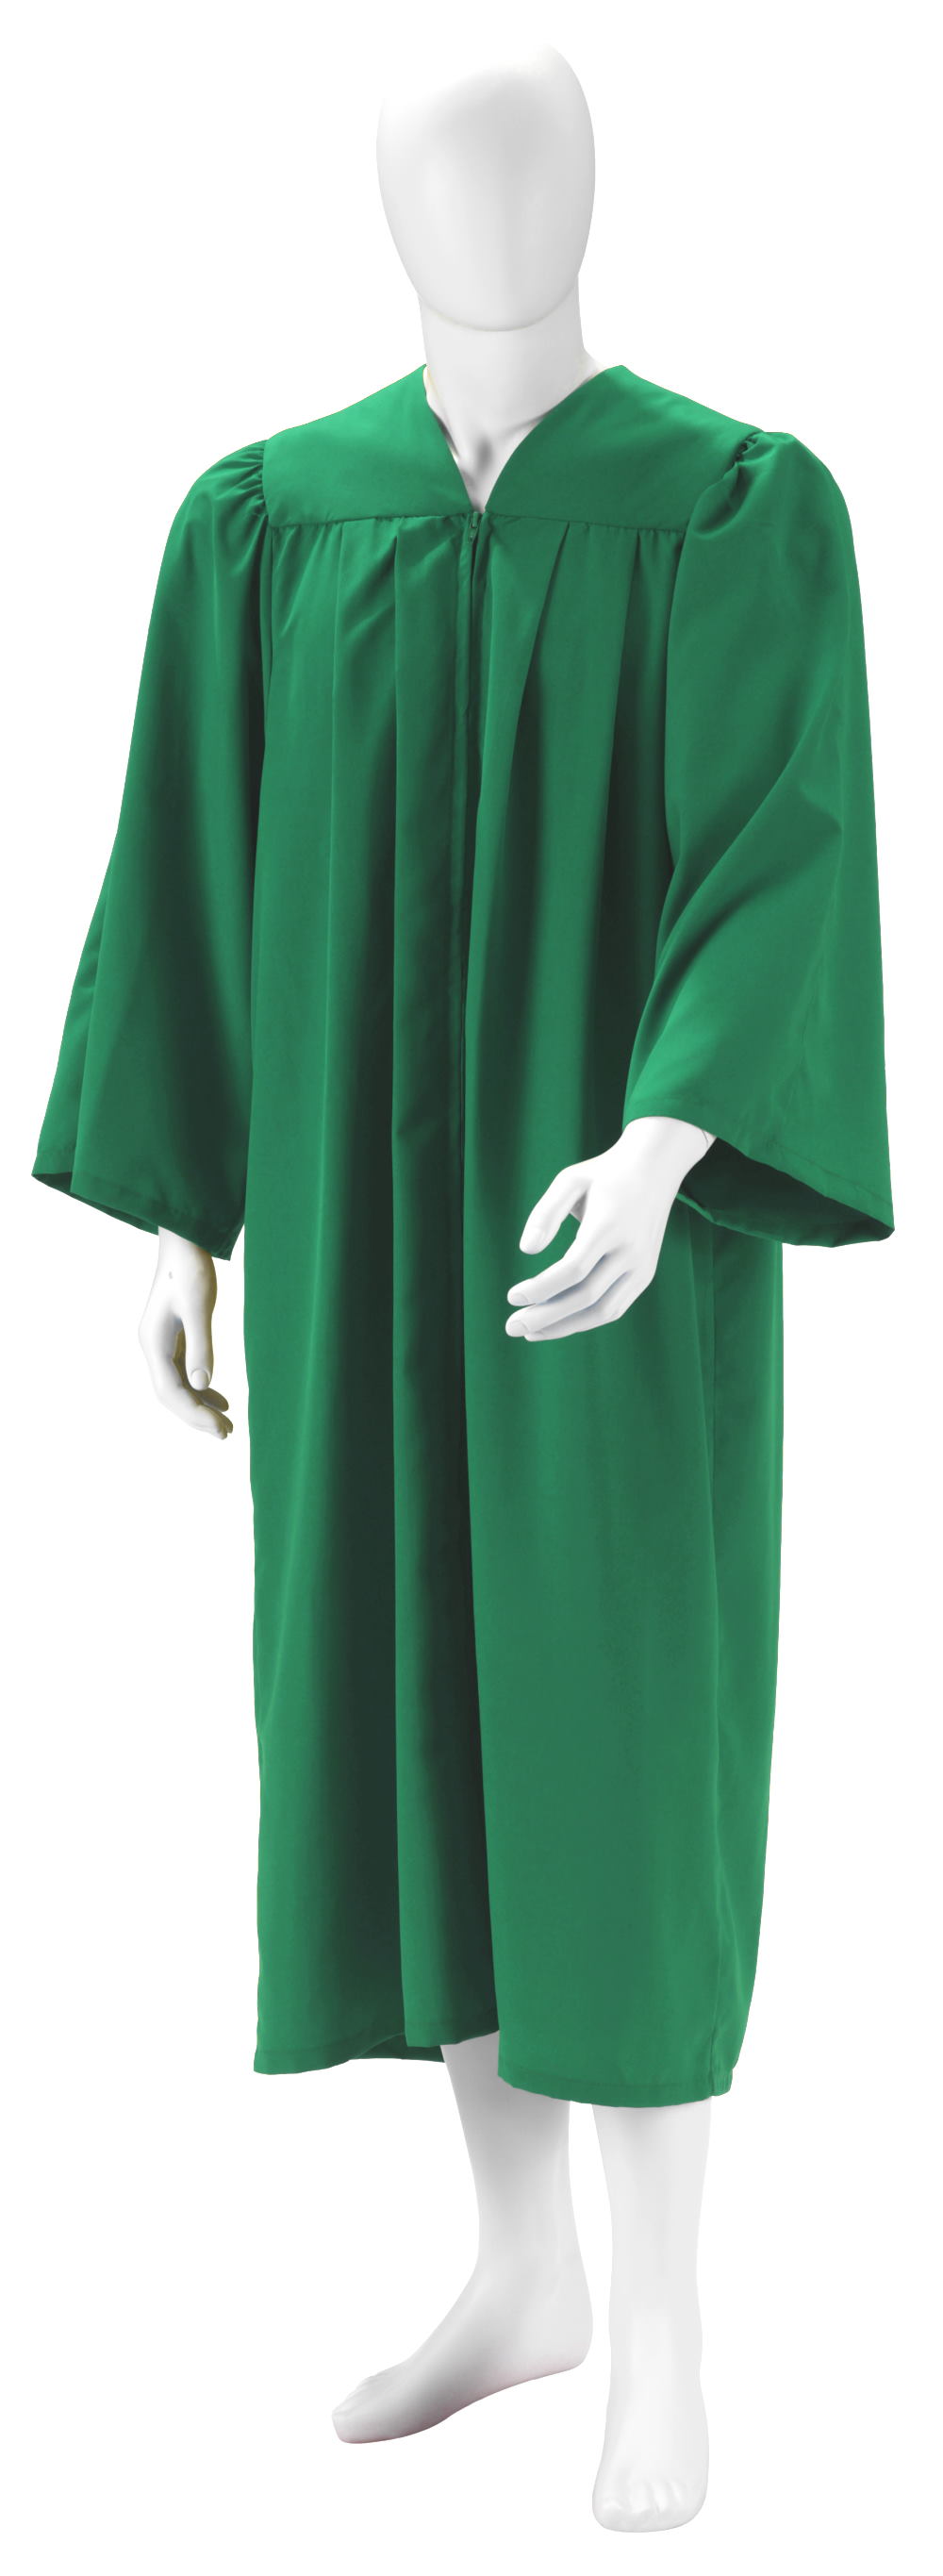 Robe UNITED Freedom grün ABVERKAUF 